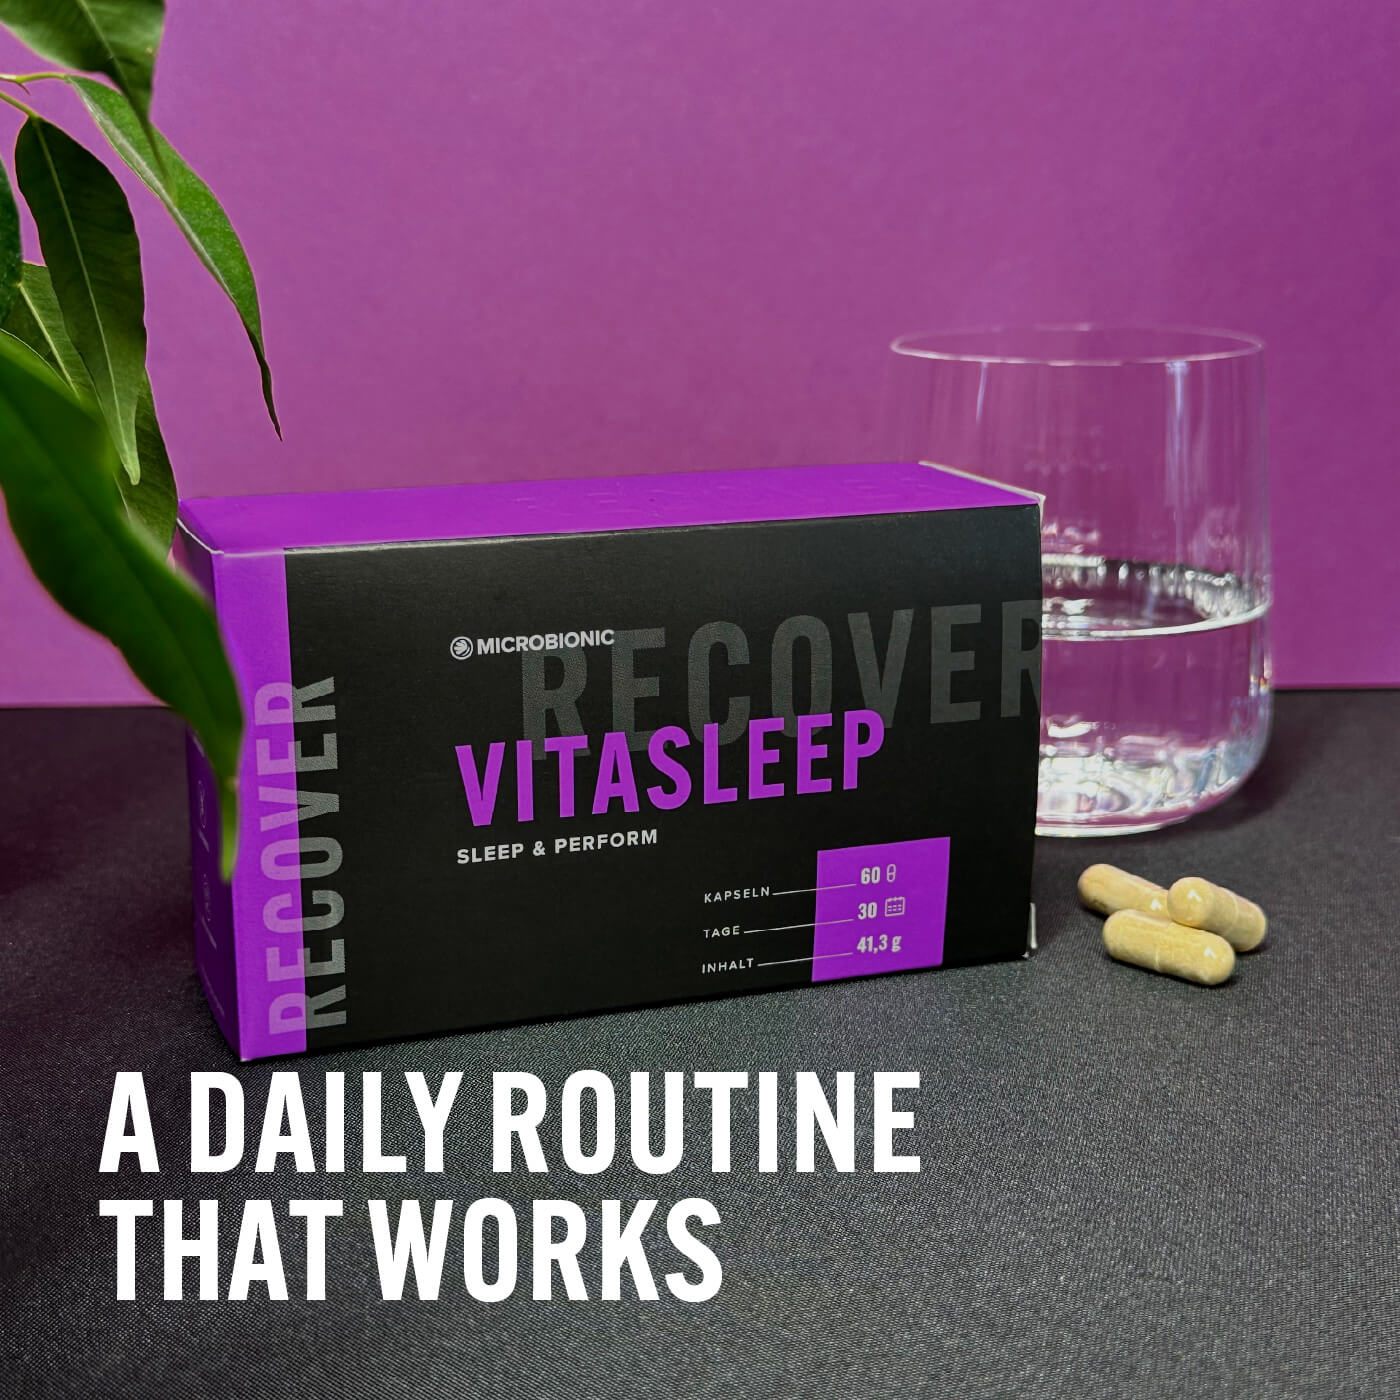 Vitasleep – A Daily Routine That Works